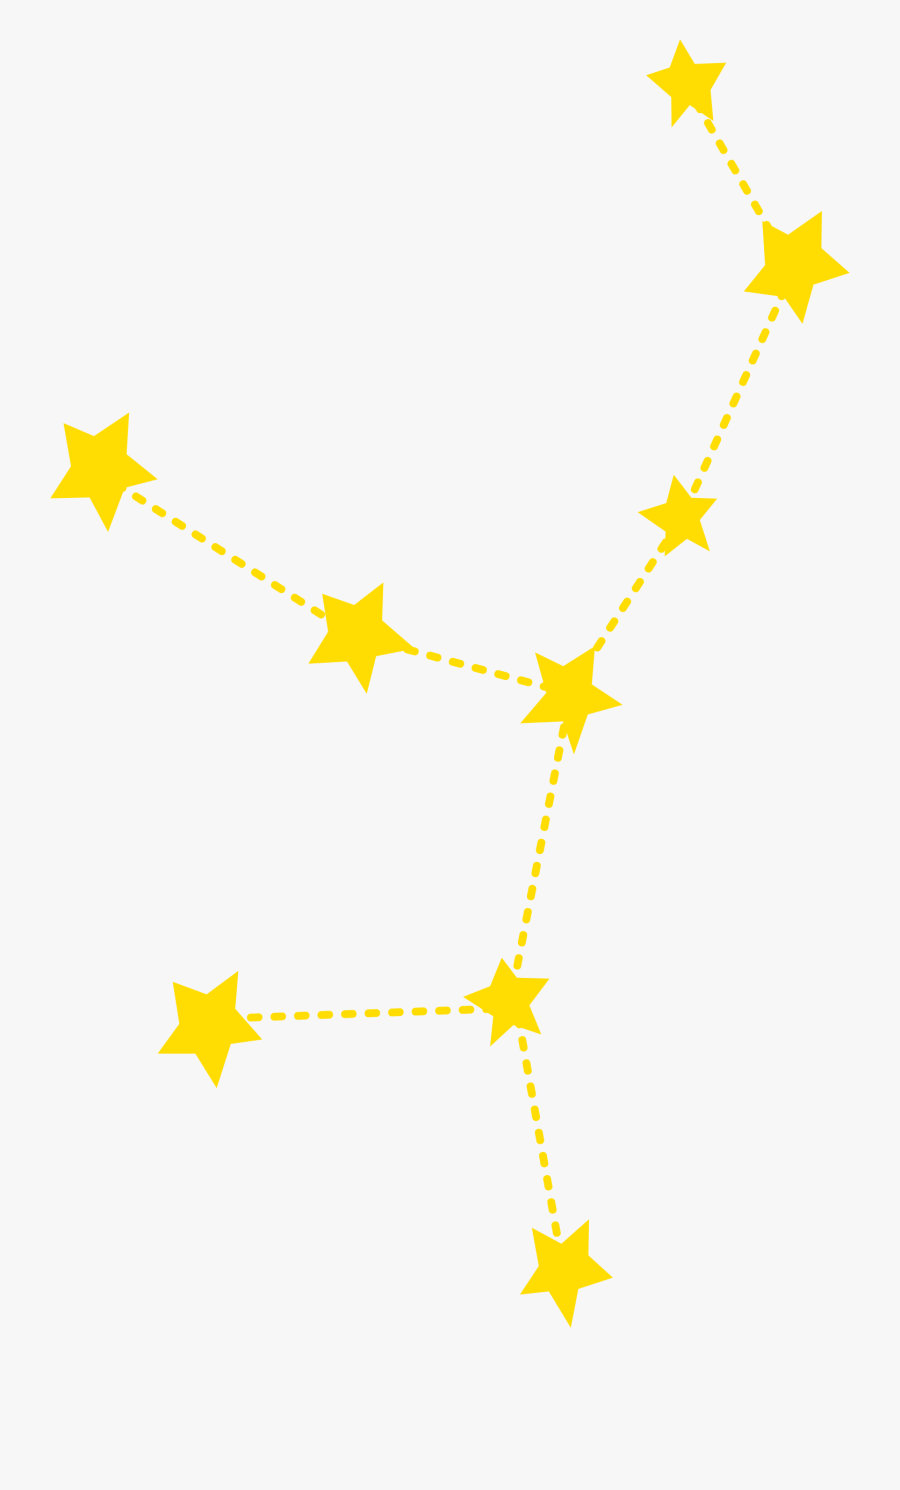 Constellation Of Virgo - Virgo Constellation Png, Transparent Clipart